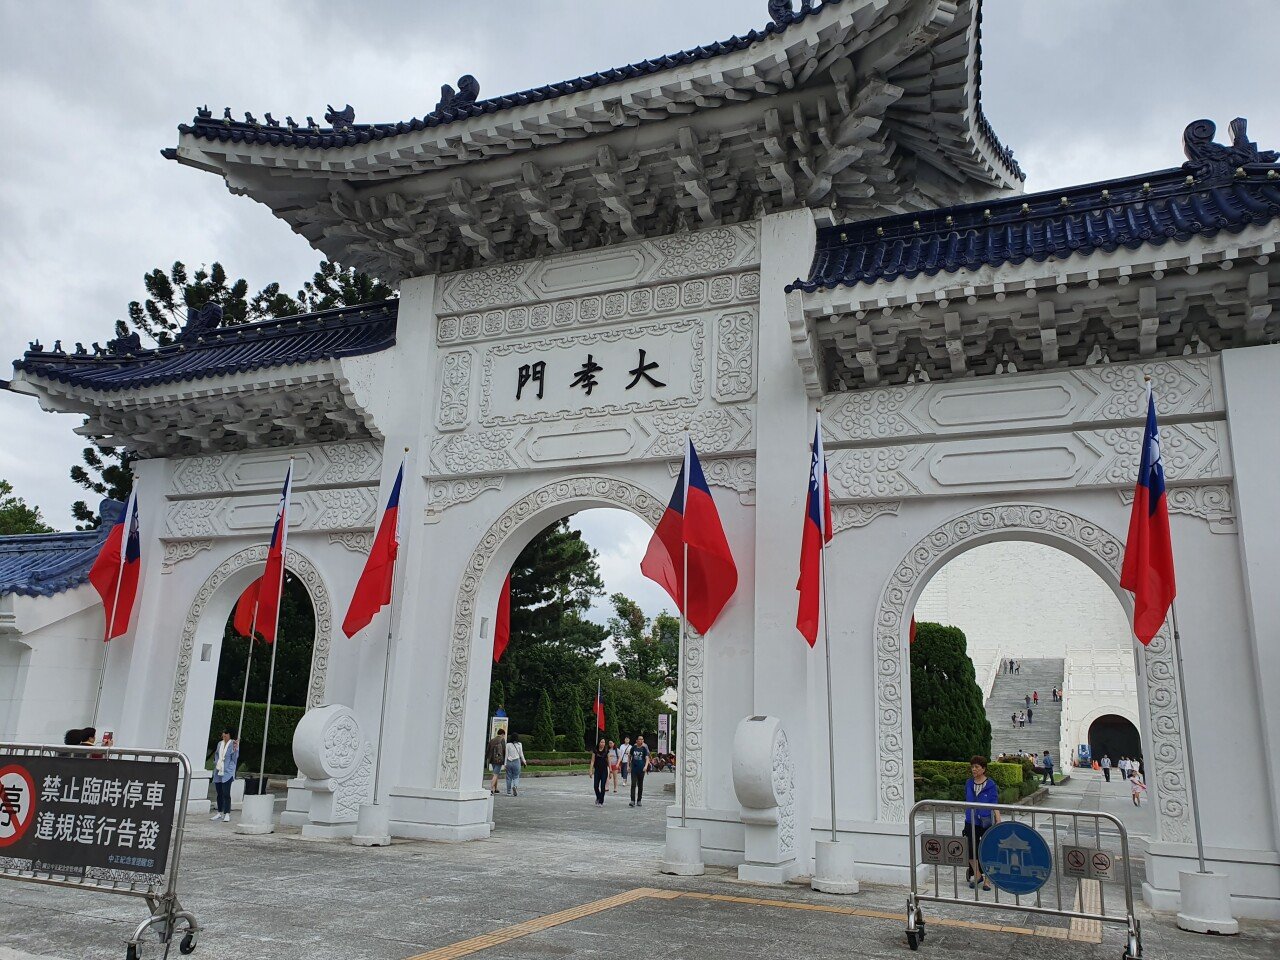 20191019_123711.jpg 대만여행기-3 ( 타이페이- 스린야시장, 중정기념당, 융캉우육면, 타이페이101타워)